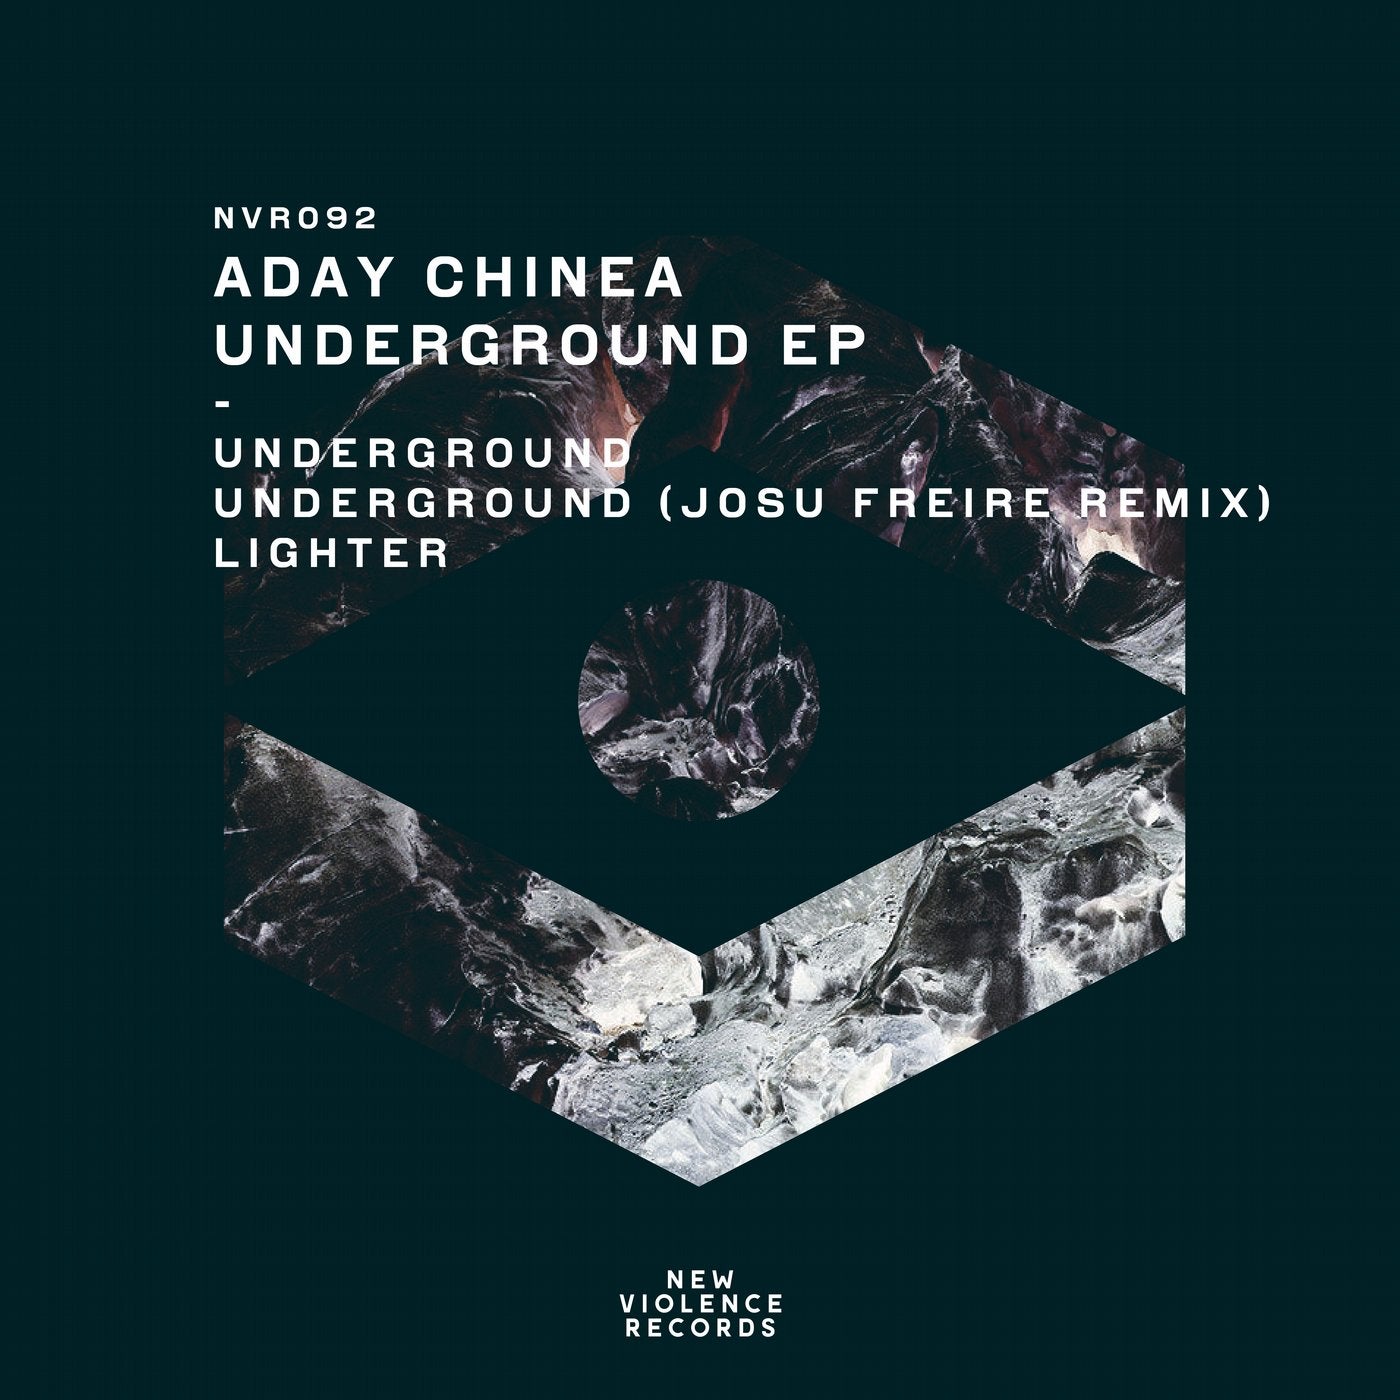 Underground EP